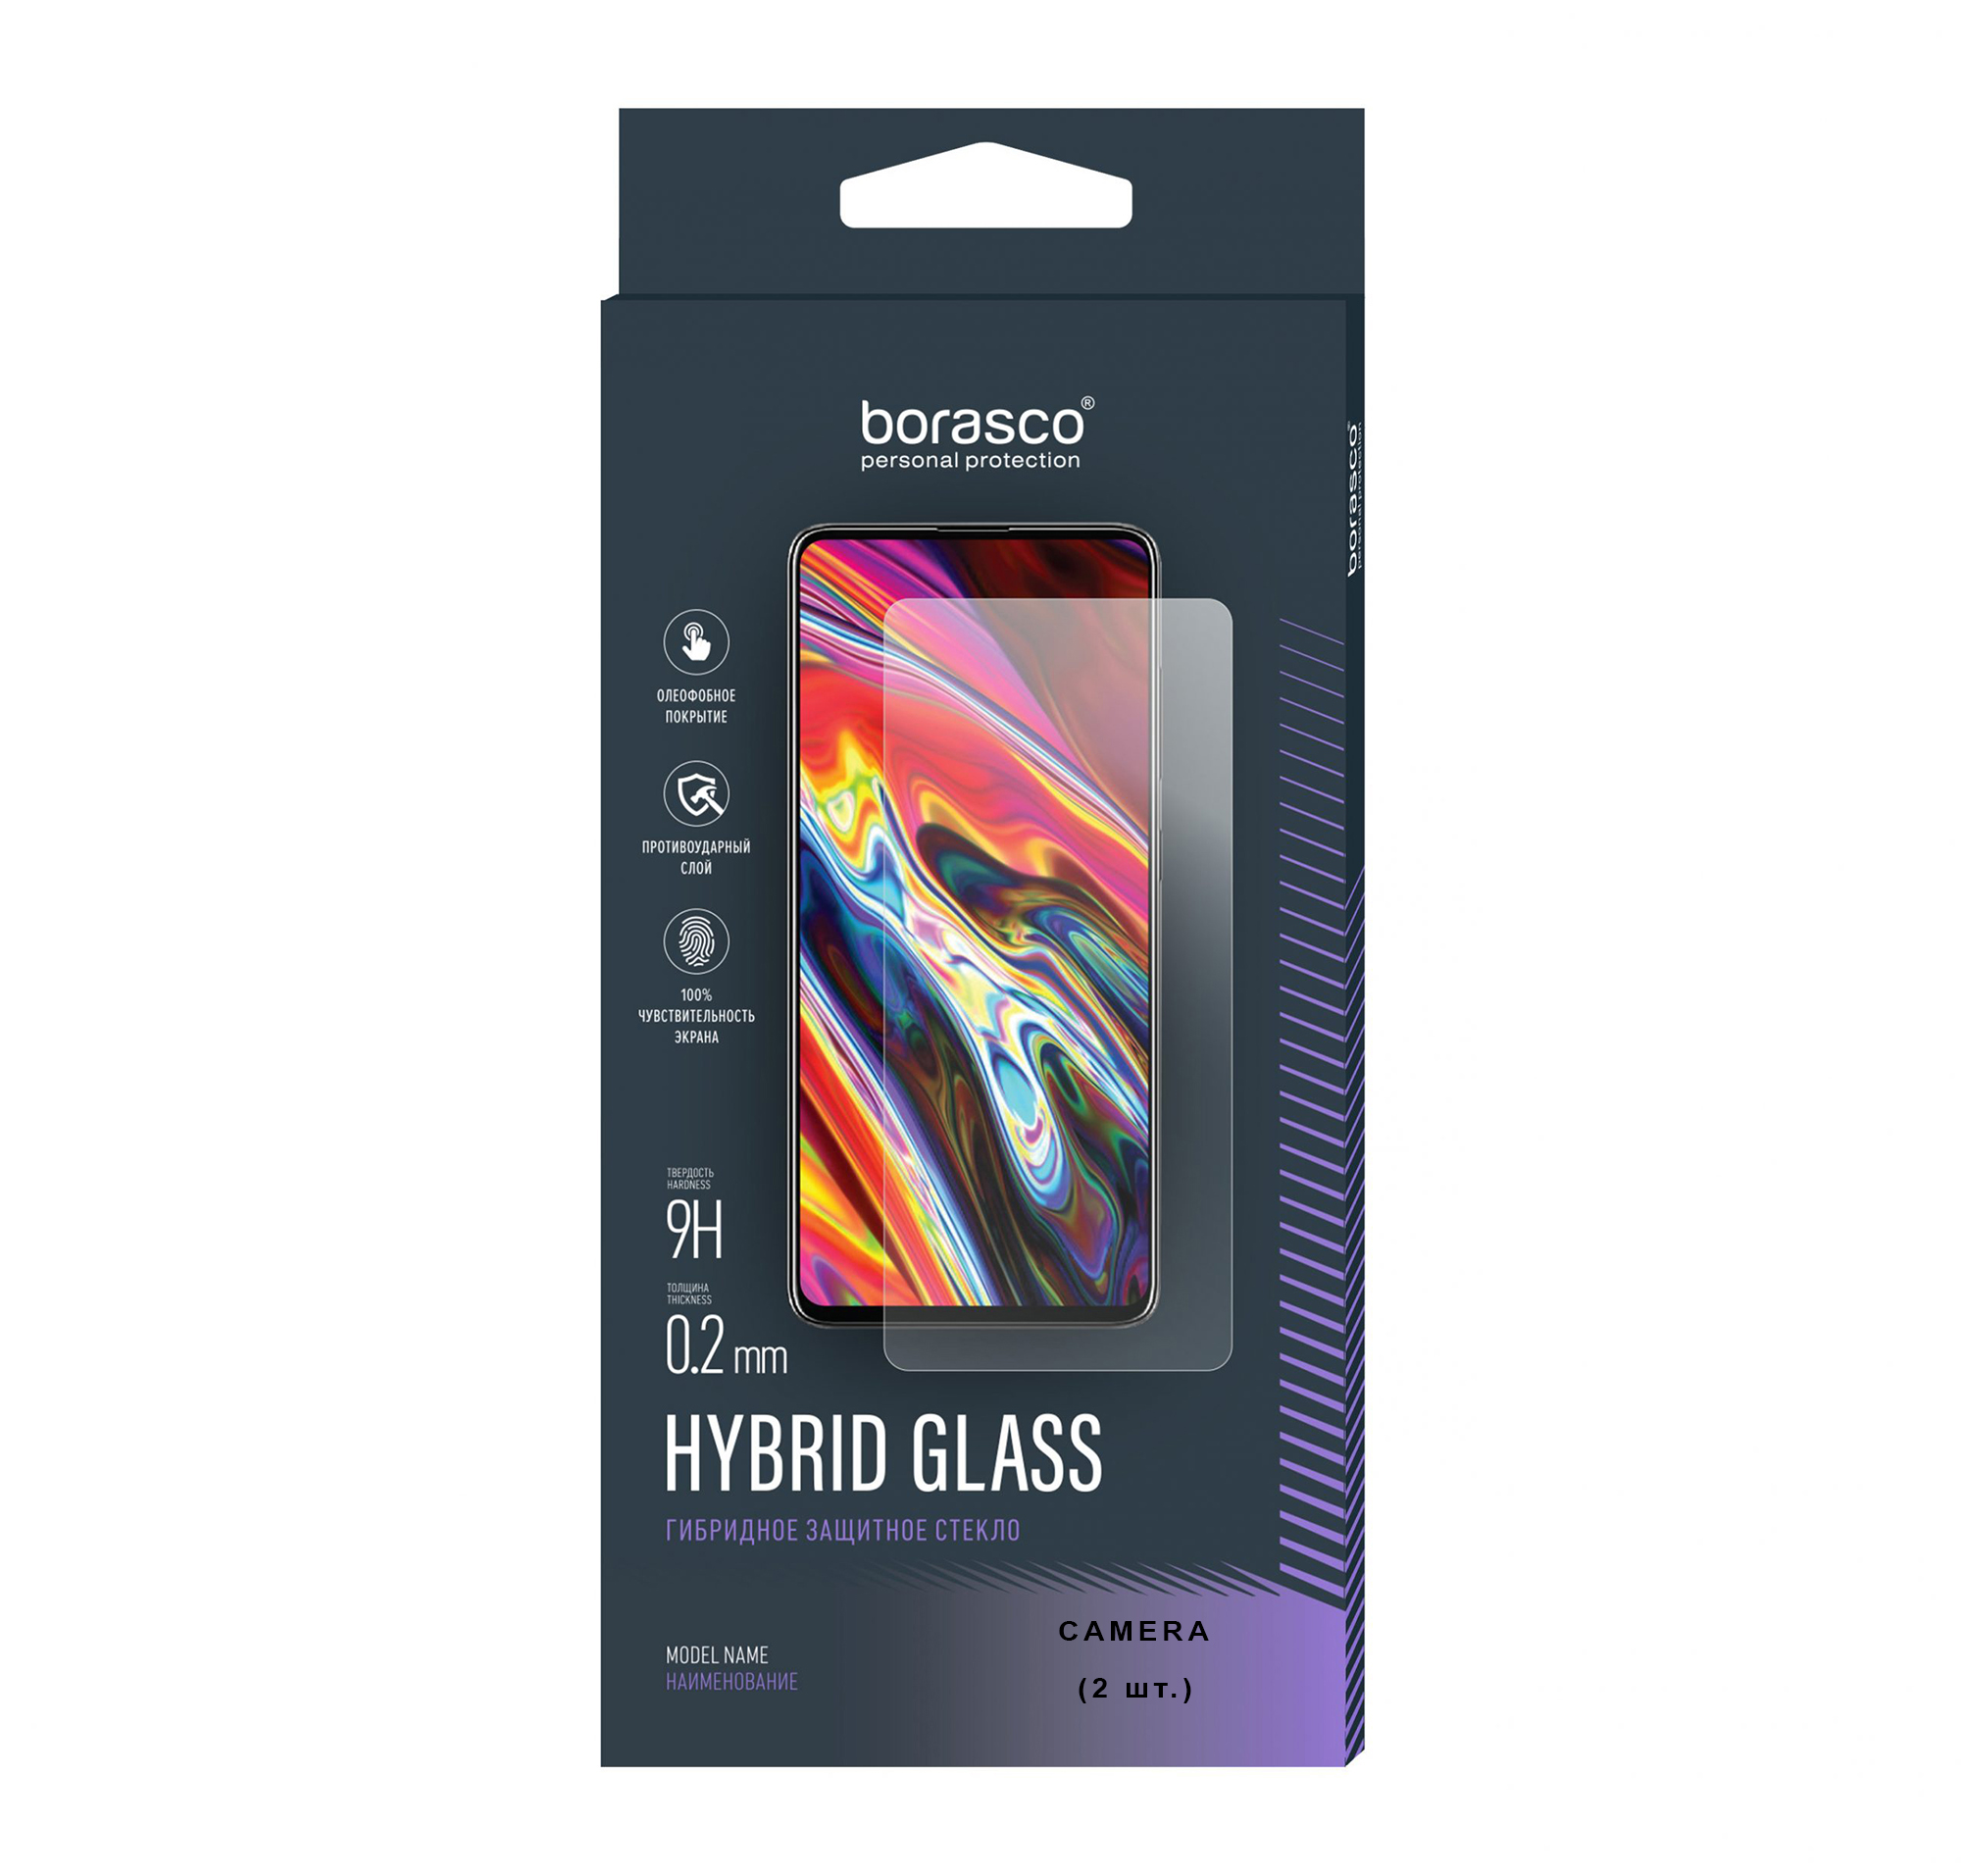 Защитное стекло (Экран+Камера) Hybrid Glass для OPPO A5/ A9 2020 защитное стекло для oppo a5 a9 2020 оппо а5 а9 2020 гибридное на камеру 2 шт